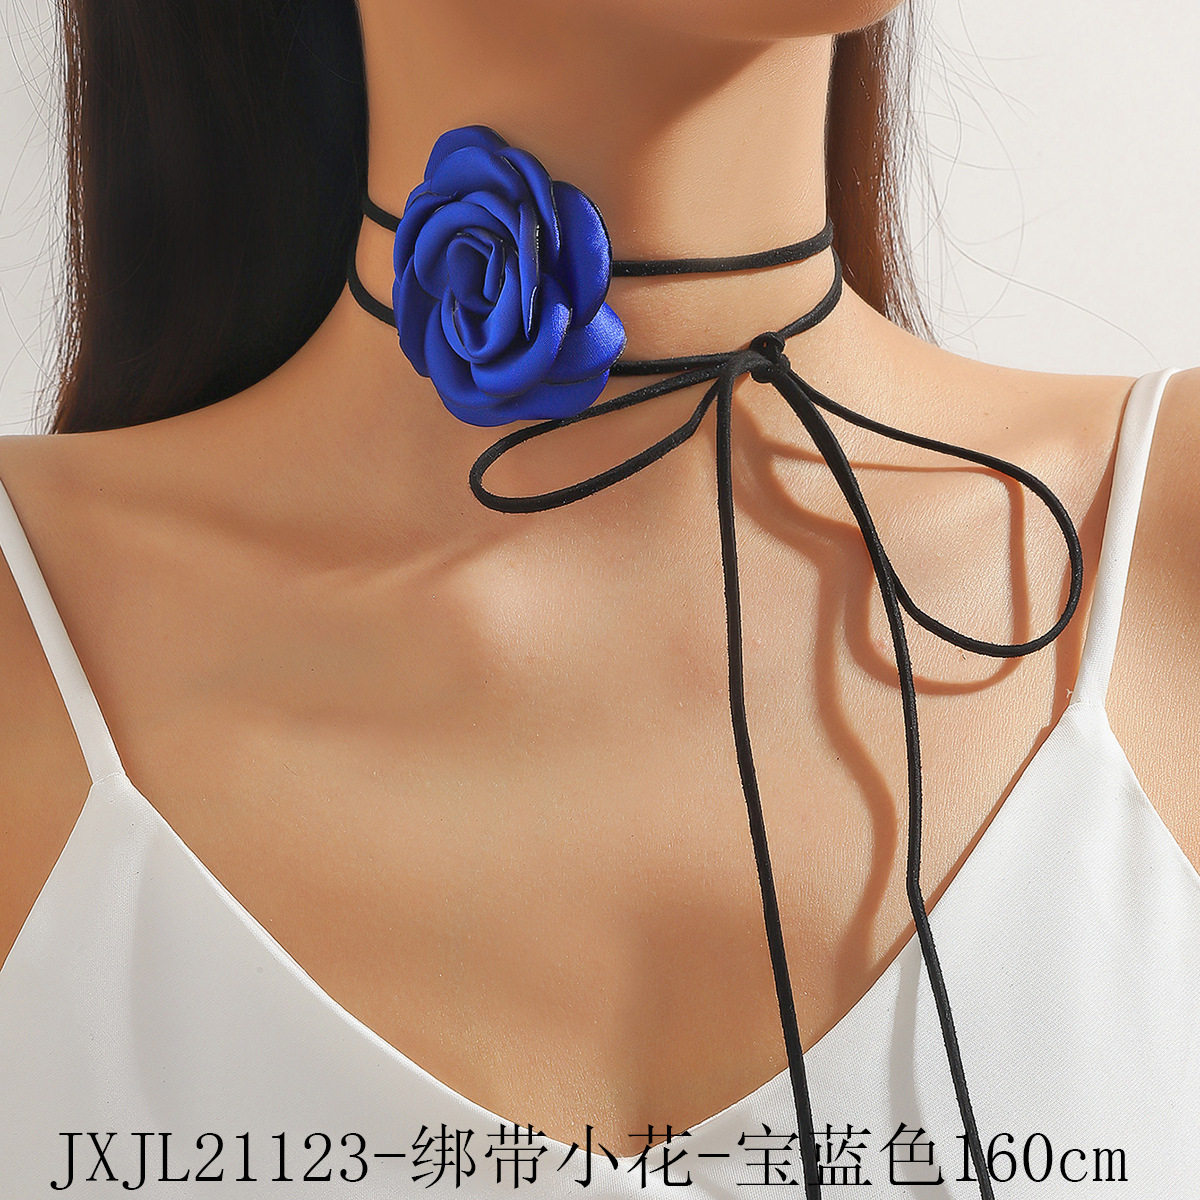 JXJL21123-绑带小花宝蓝色160cm 1.jpg